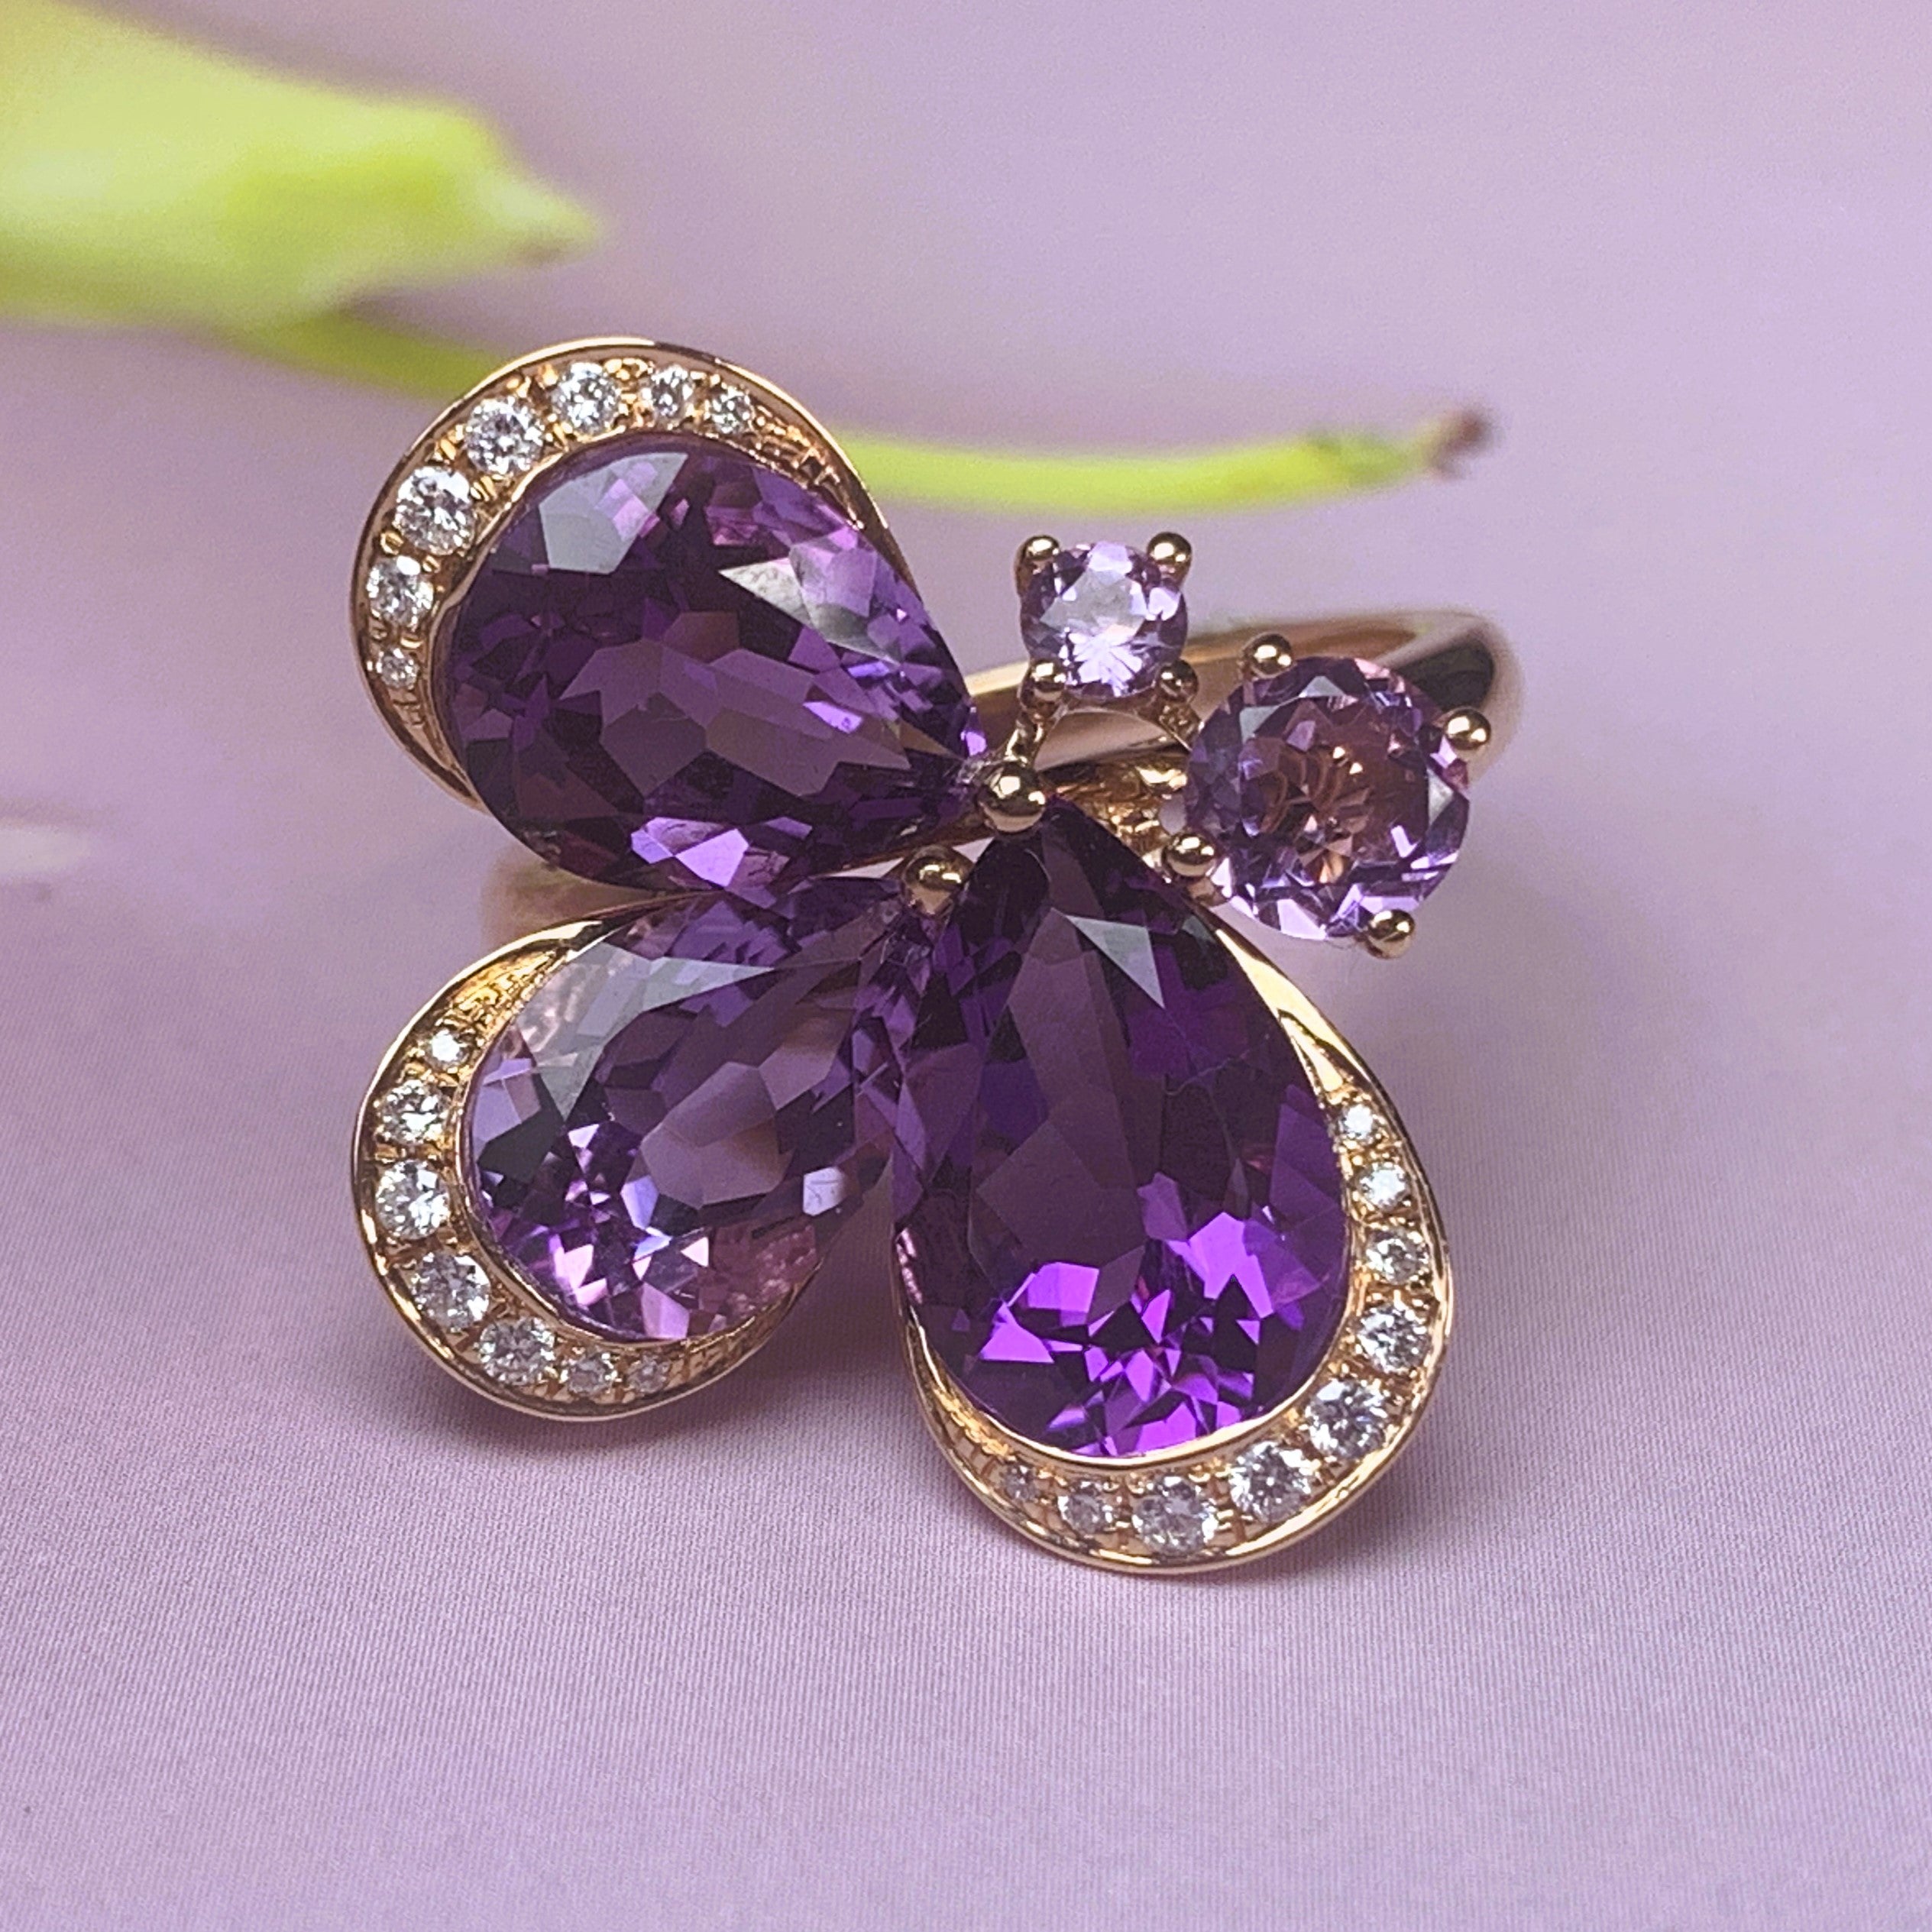 18kt Rose Gold Butterfly design Amethyst and Diamond ring - Masterpiece Jewellery Opal & Gems Sydney Australia | Online Shop